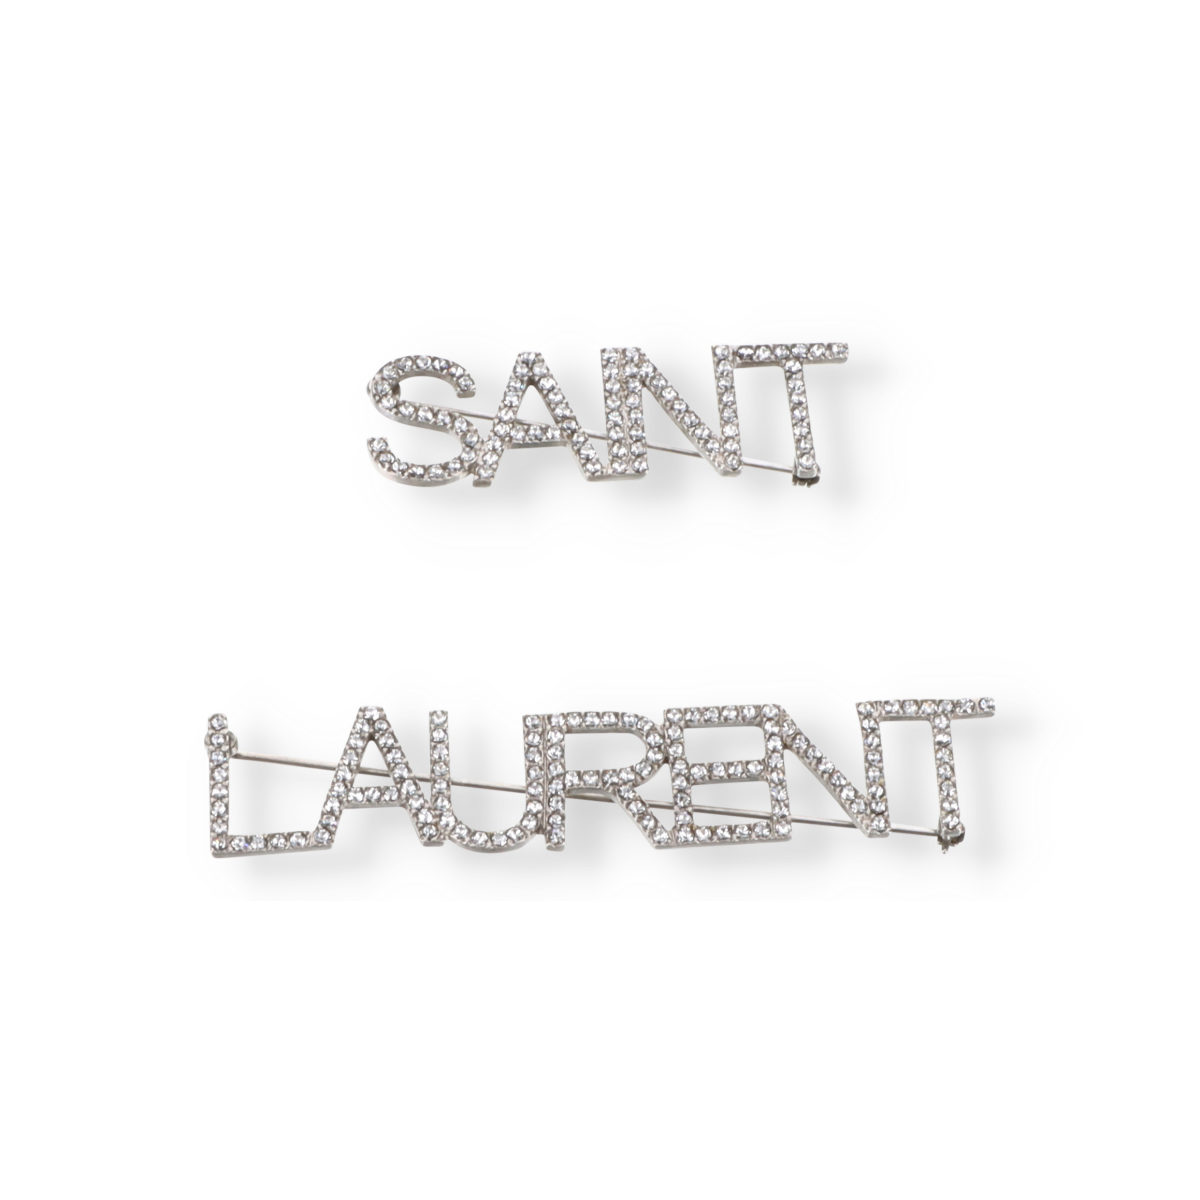 Saint Laurent Set of Brooches